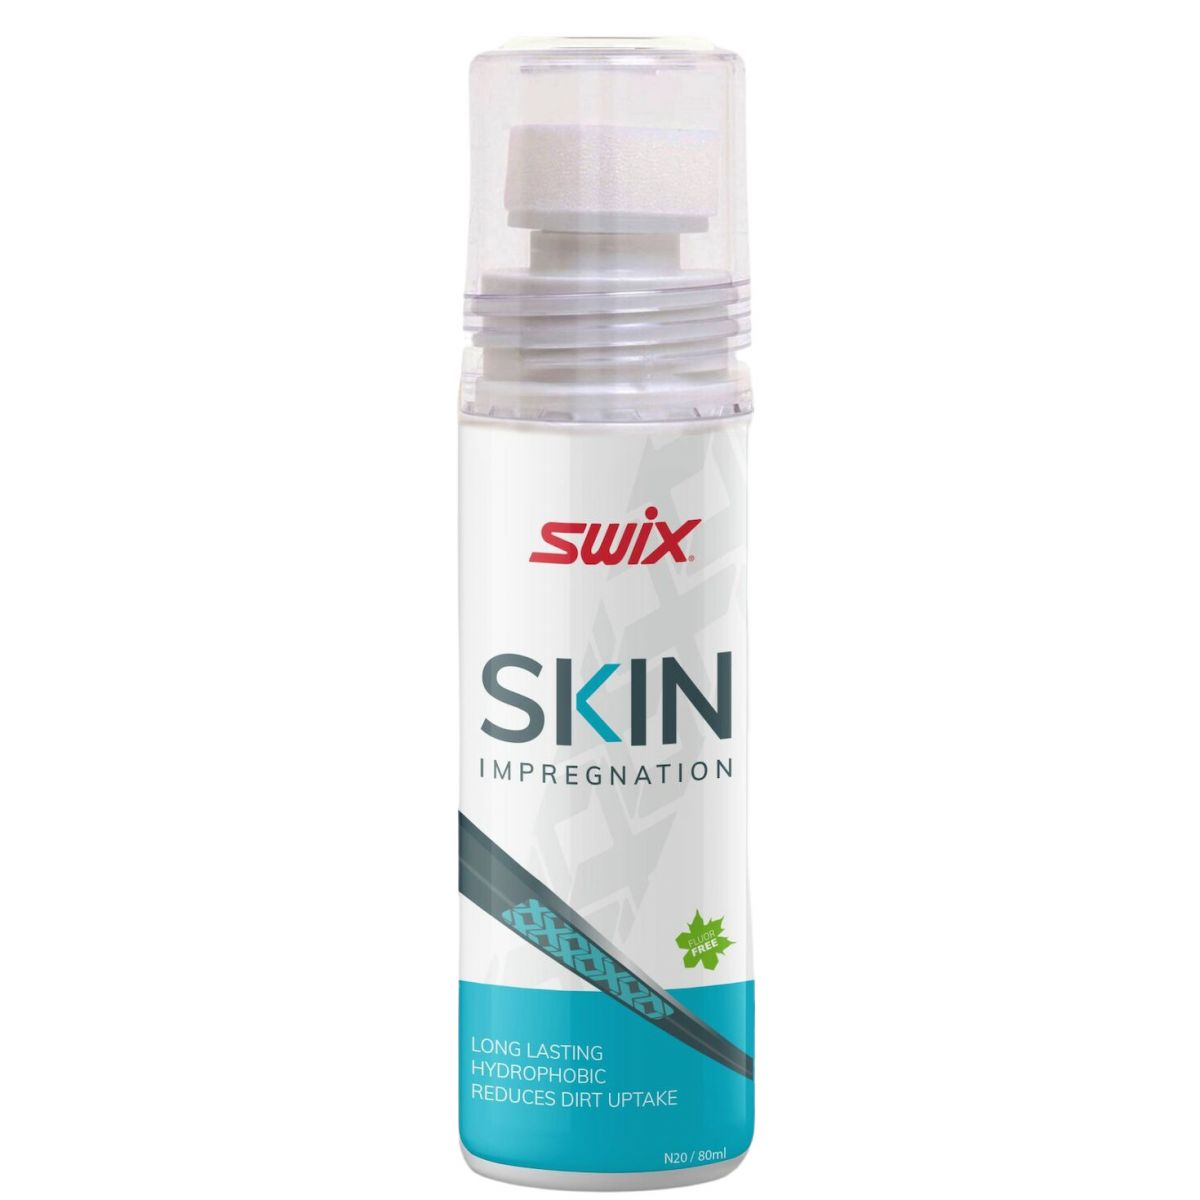 Swix Skin Impregnation, cleaner, 80ml thumbnail